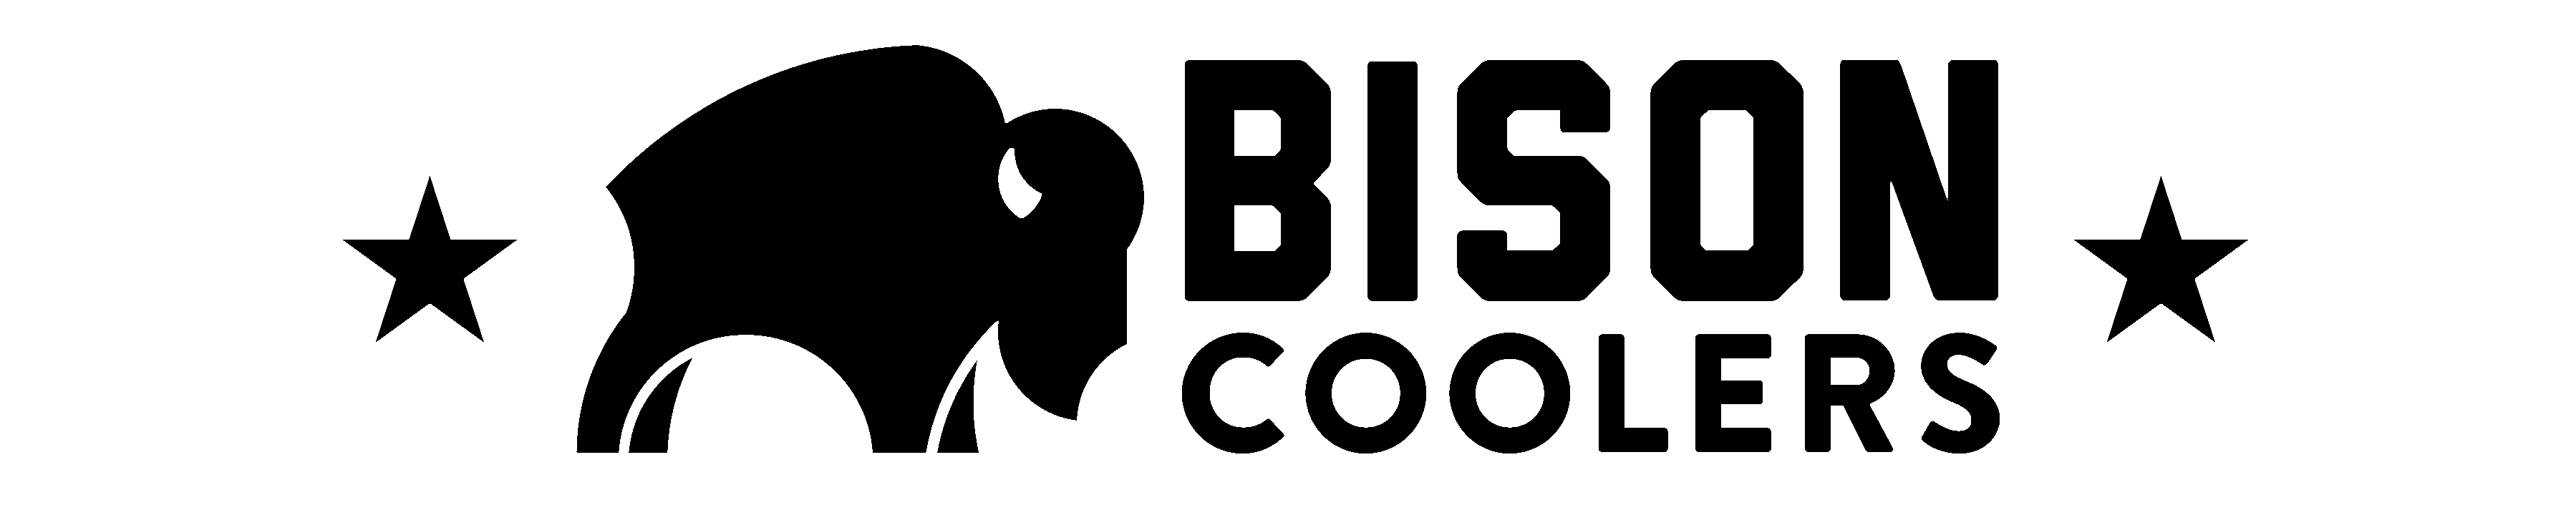 Bison Coolers Logo - Bison Coolers - Golf Cars of NWA